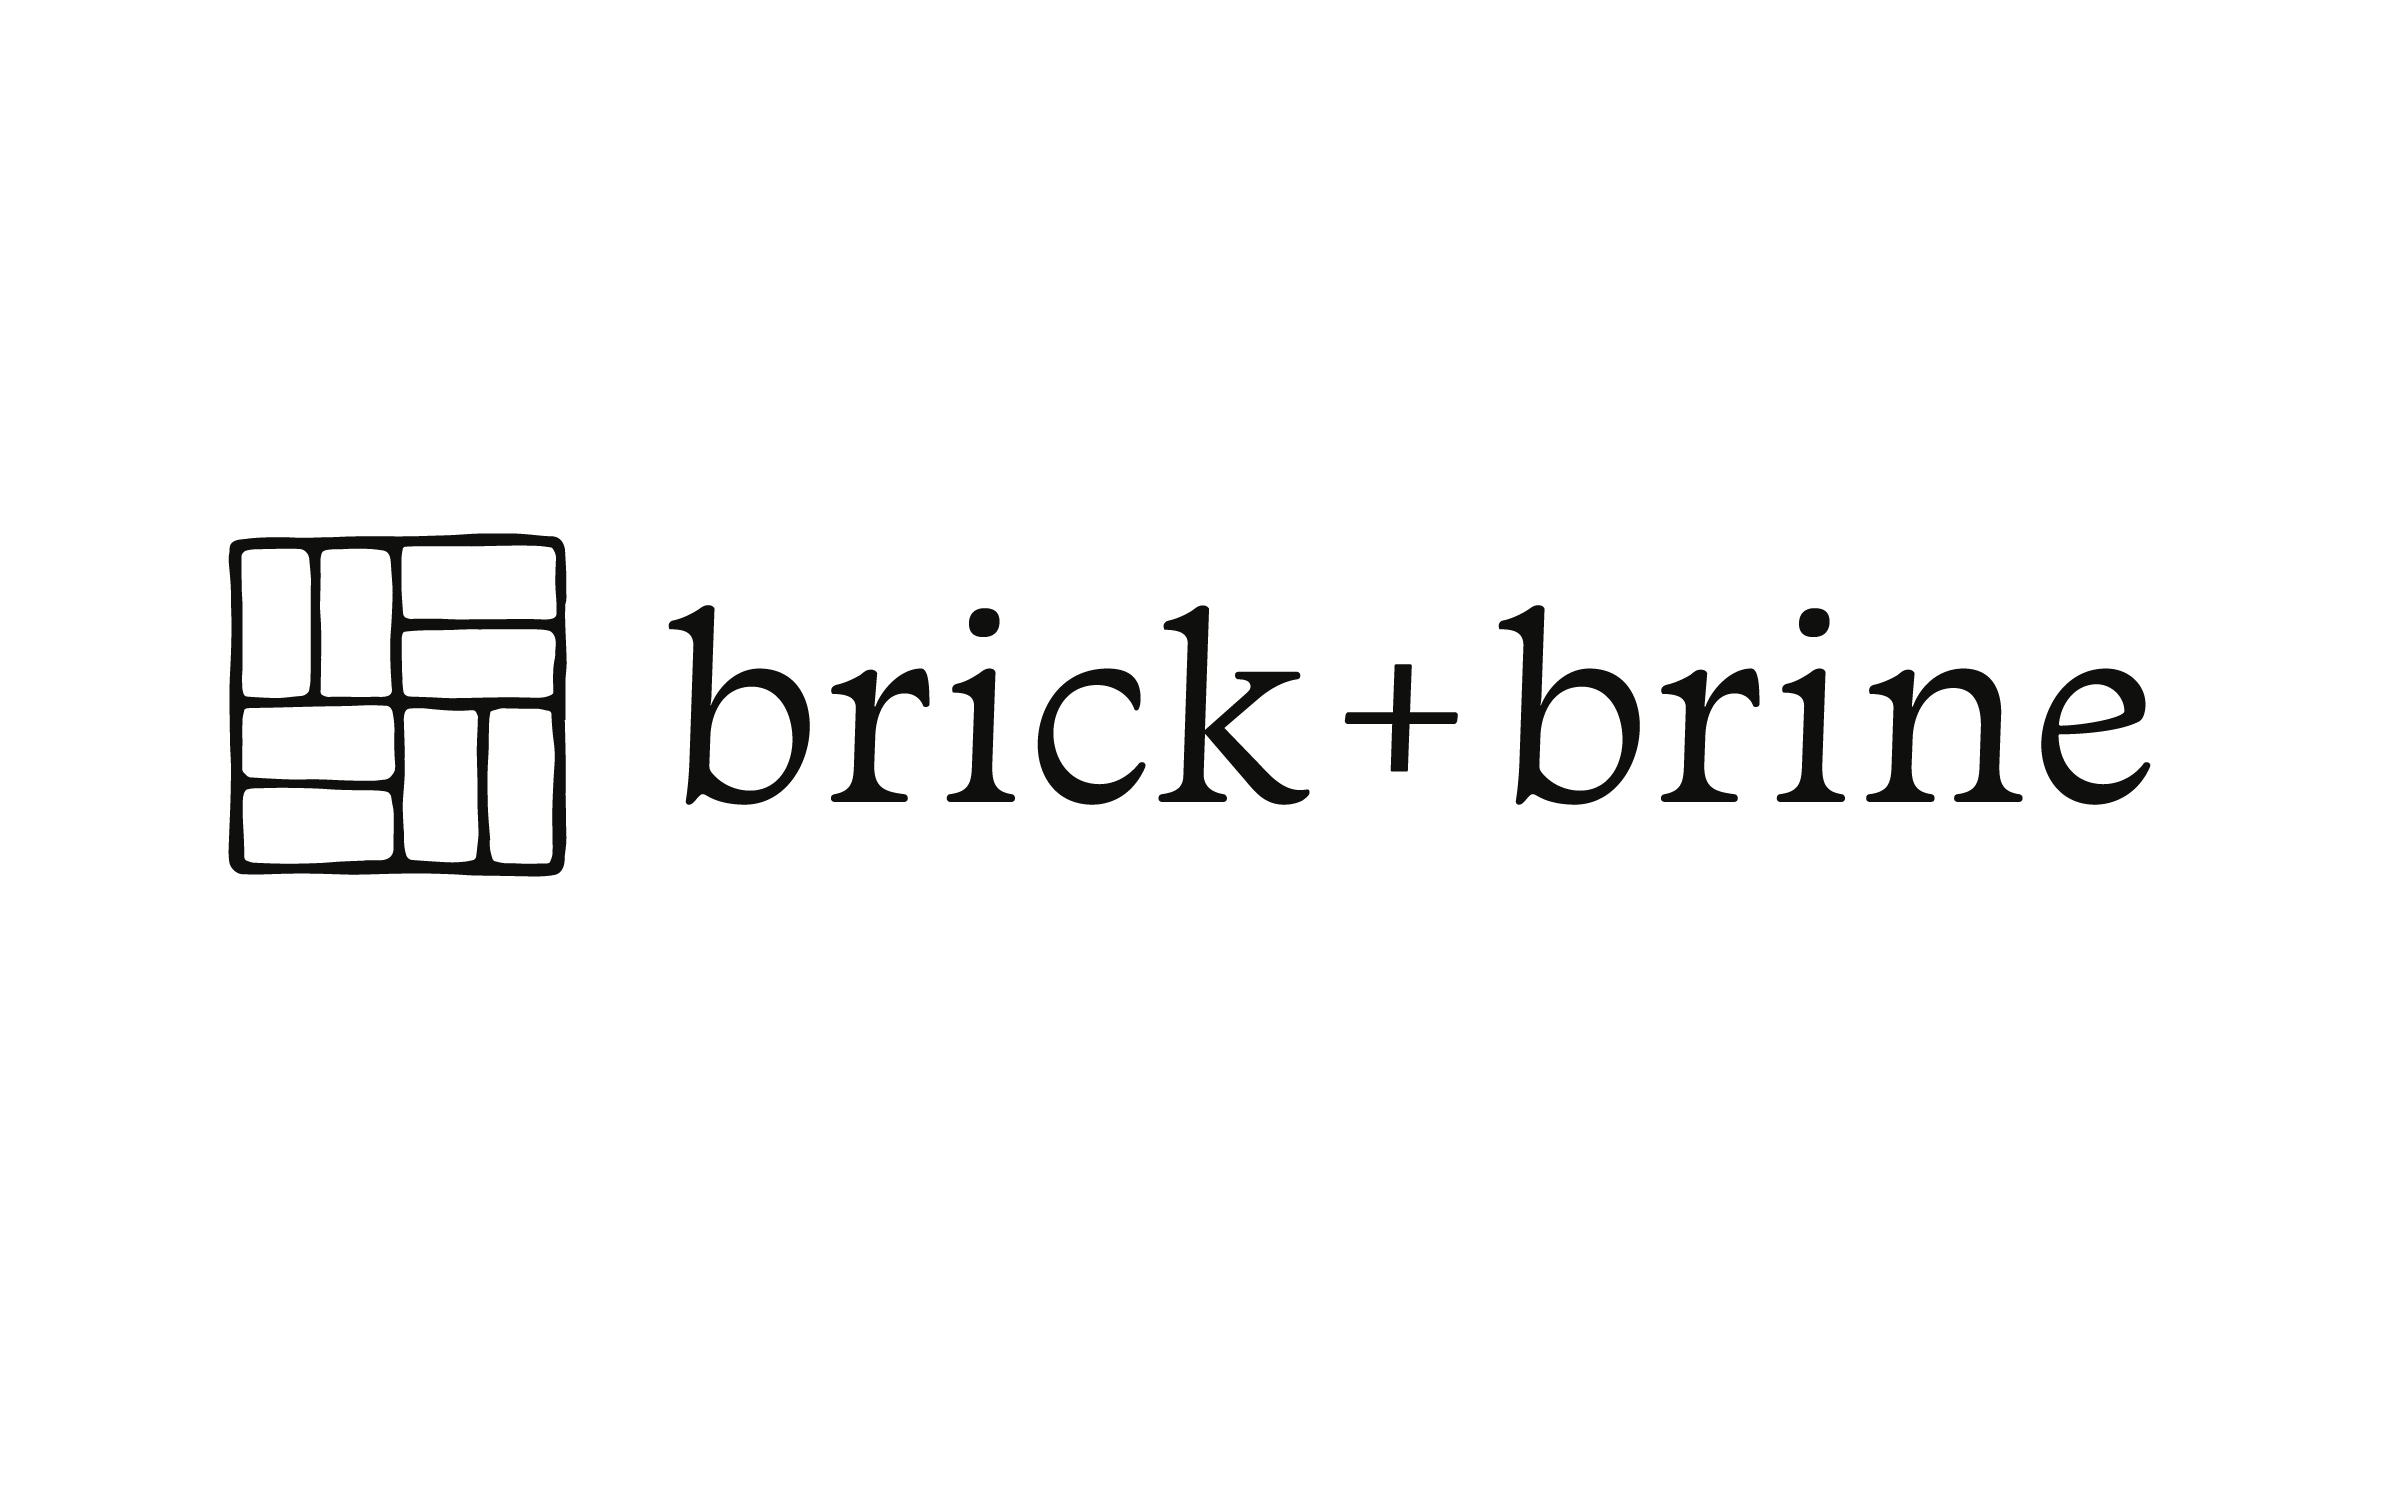 Introducing Brick and Brine